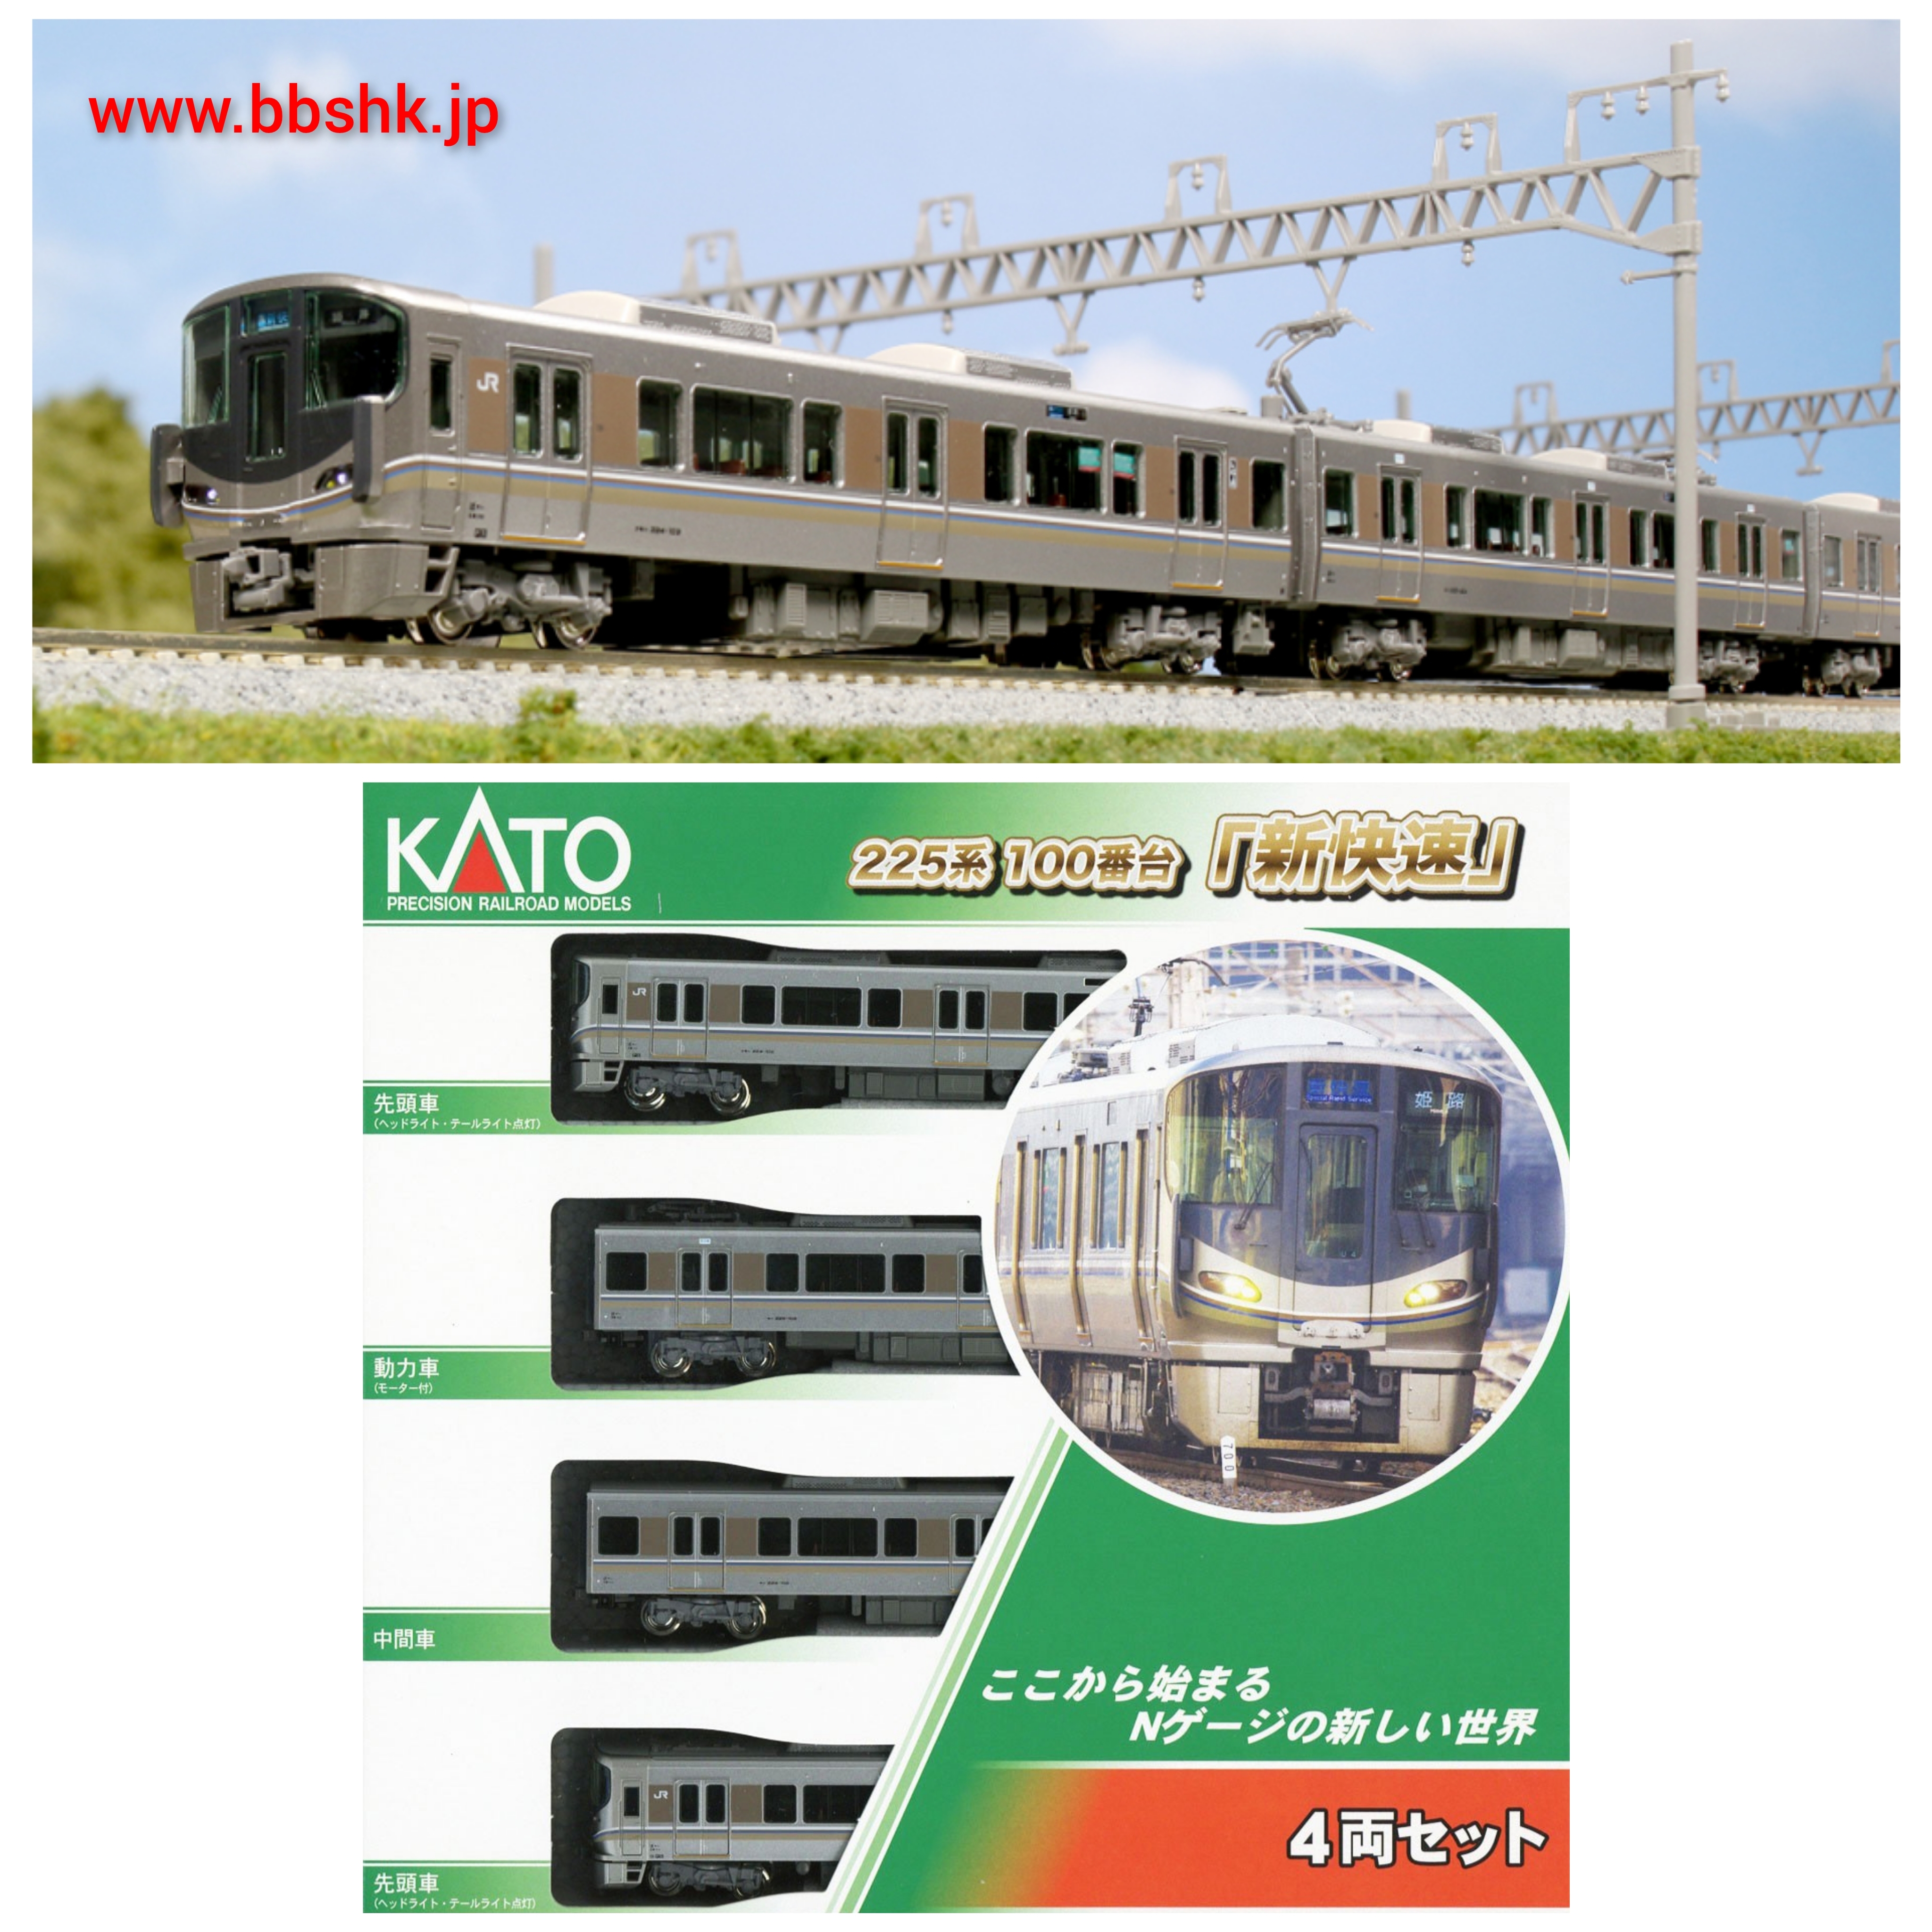 KATO10-1440 225系100番台新快速 4両セット - 鉄道模型